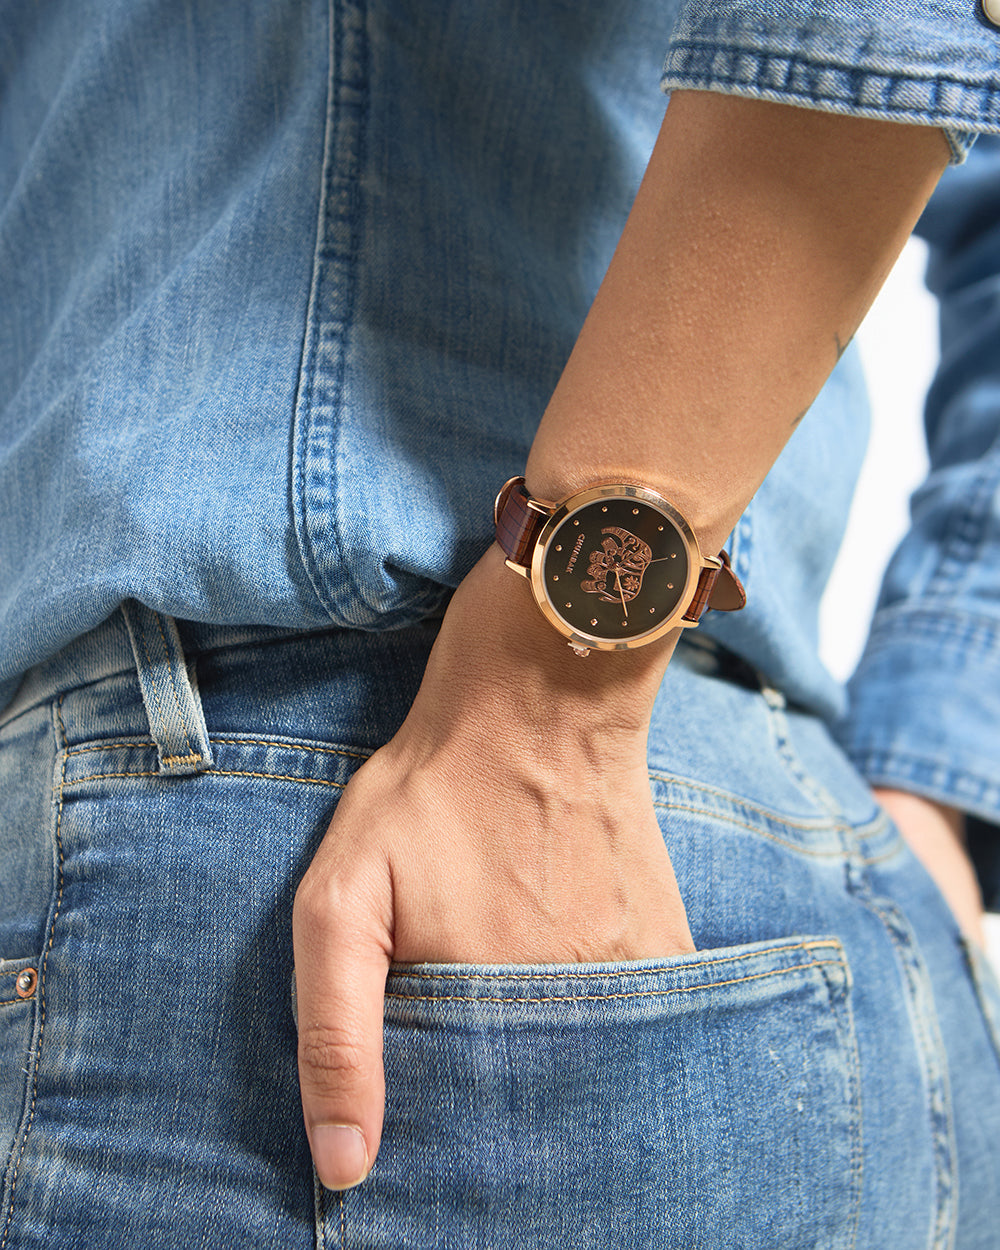 Fantastical Elephant Printed Wrist Watch With Bracelet Set